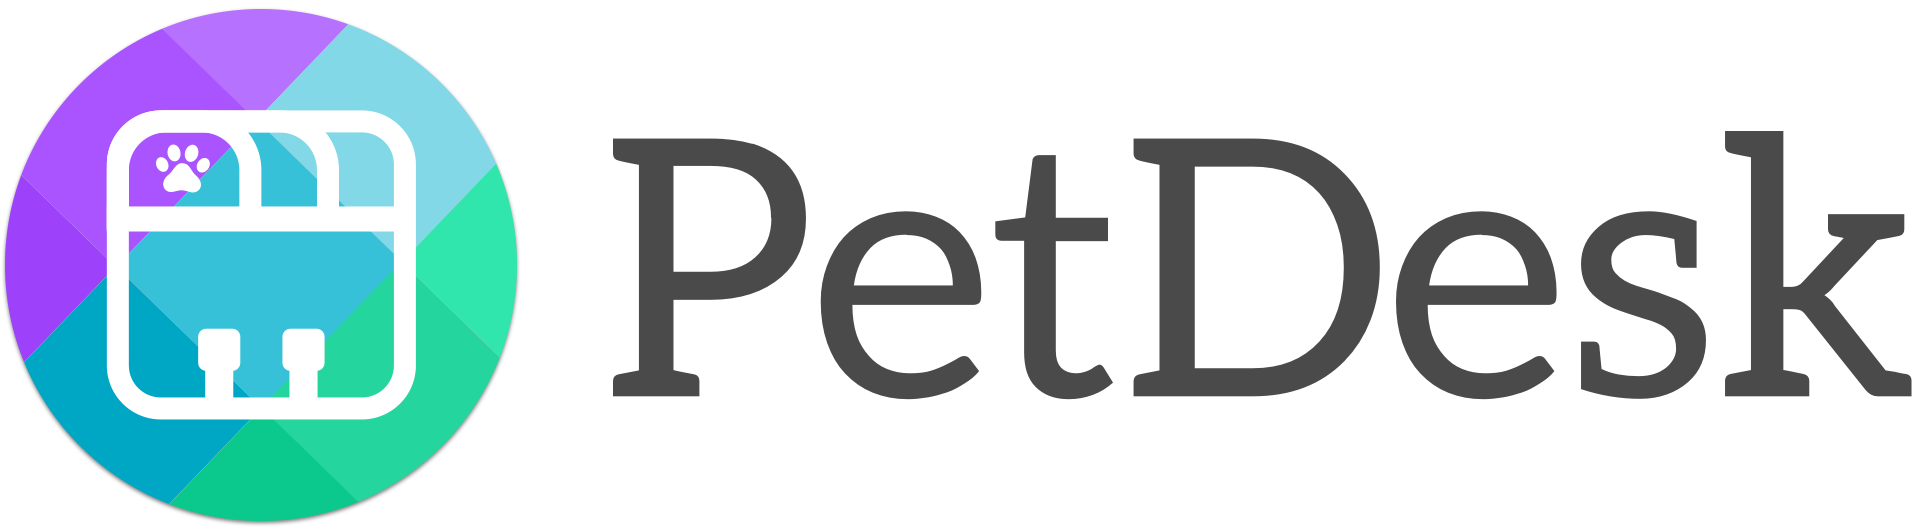 PetDesk